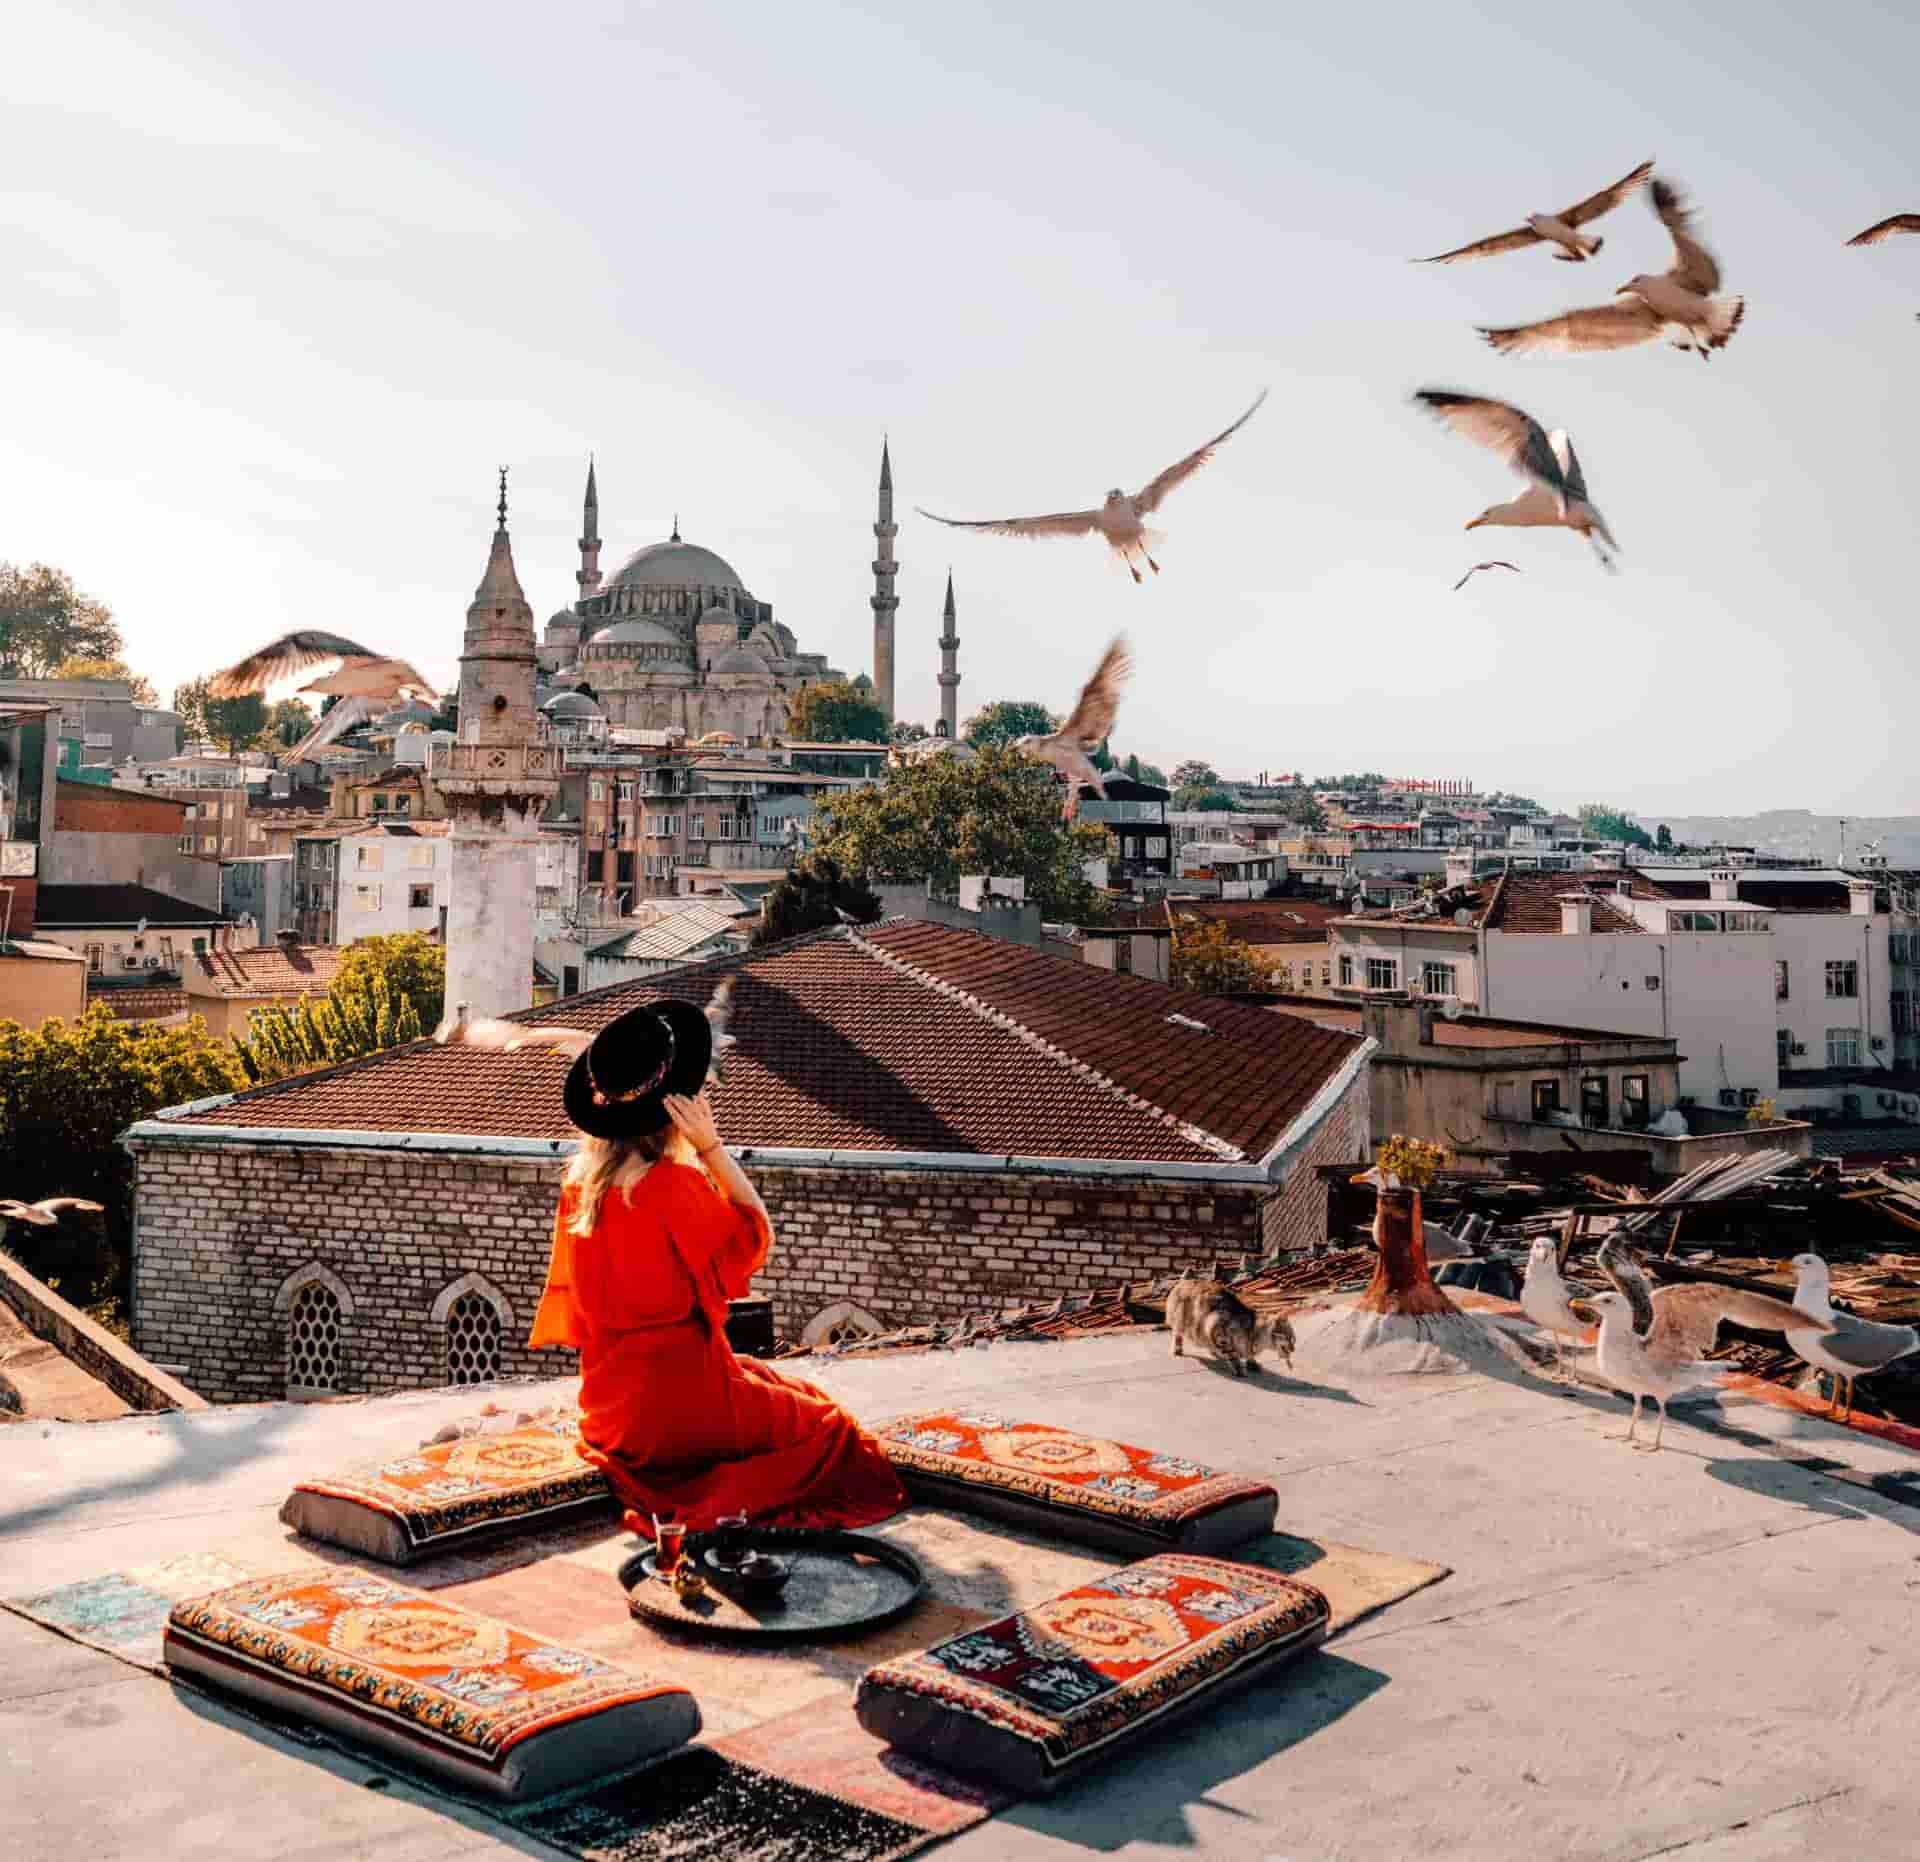 The Best rooftop restaurants in Istanbul